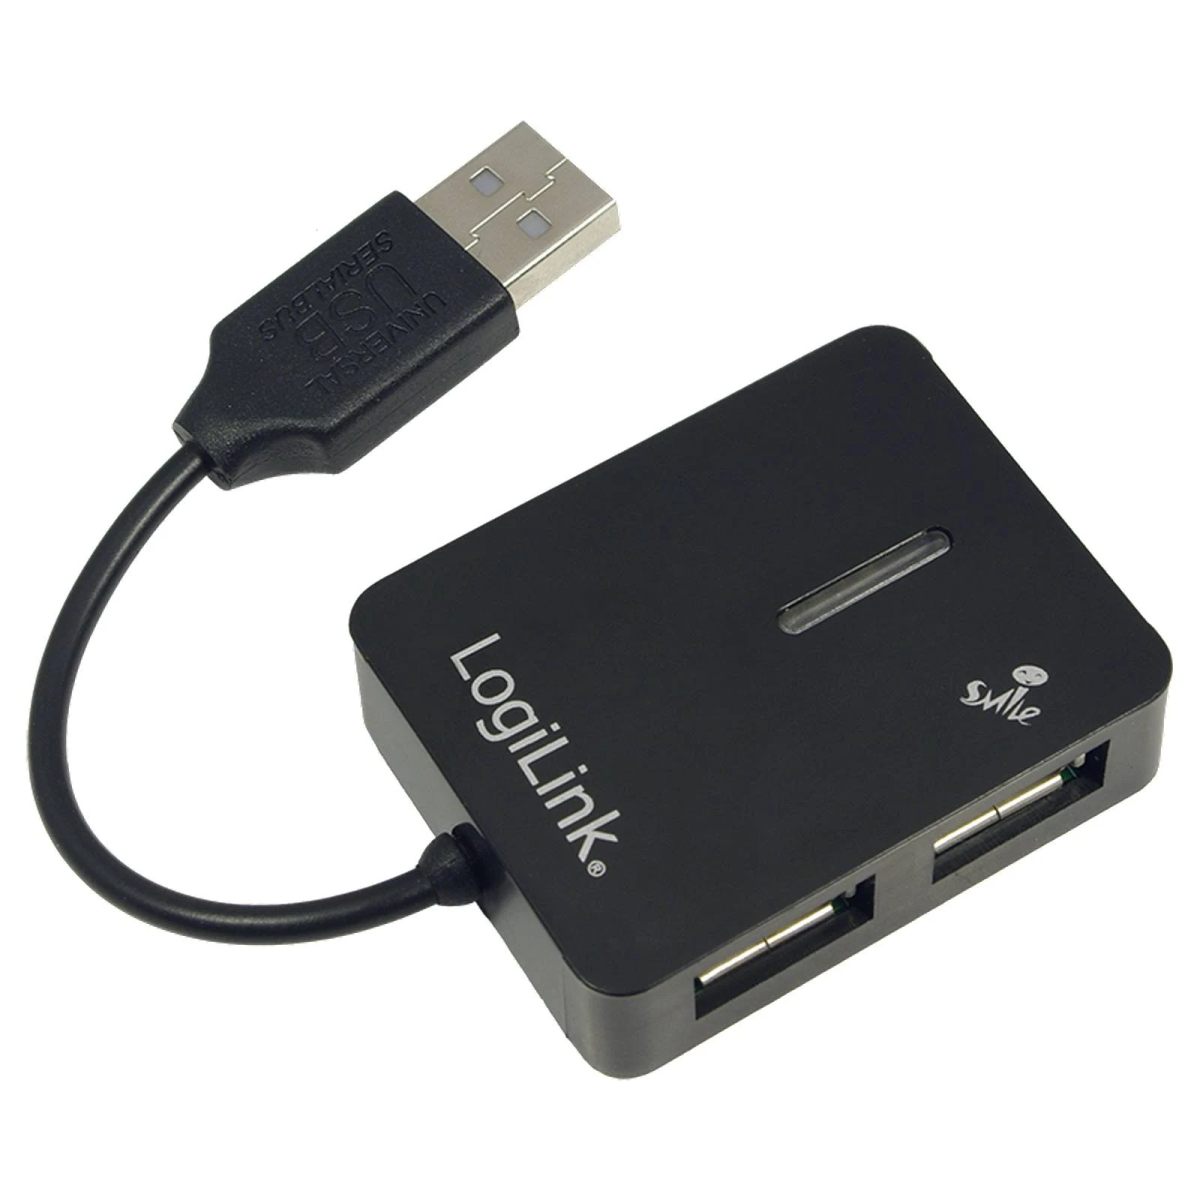 USB, UA-0139, LOGILINK Hub Schwarz